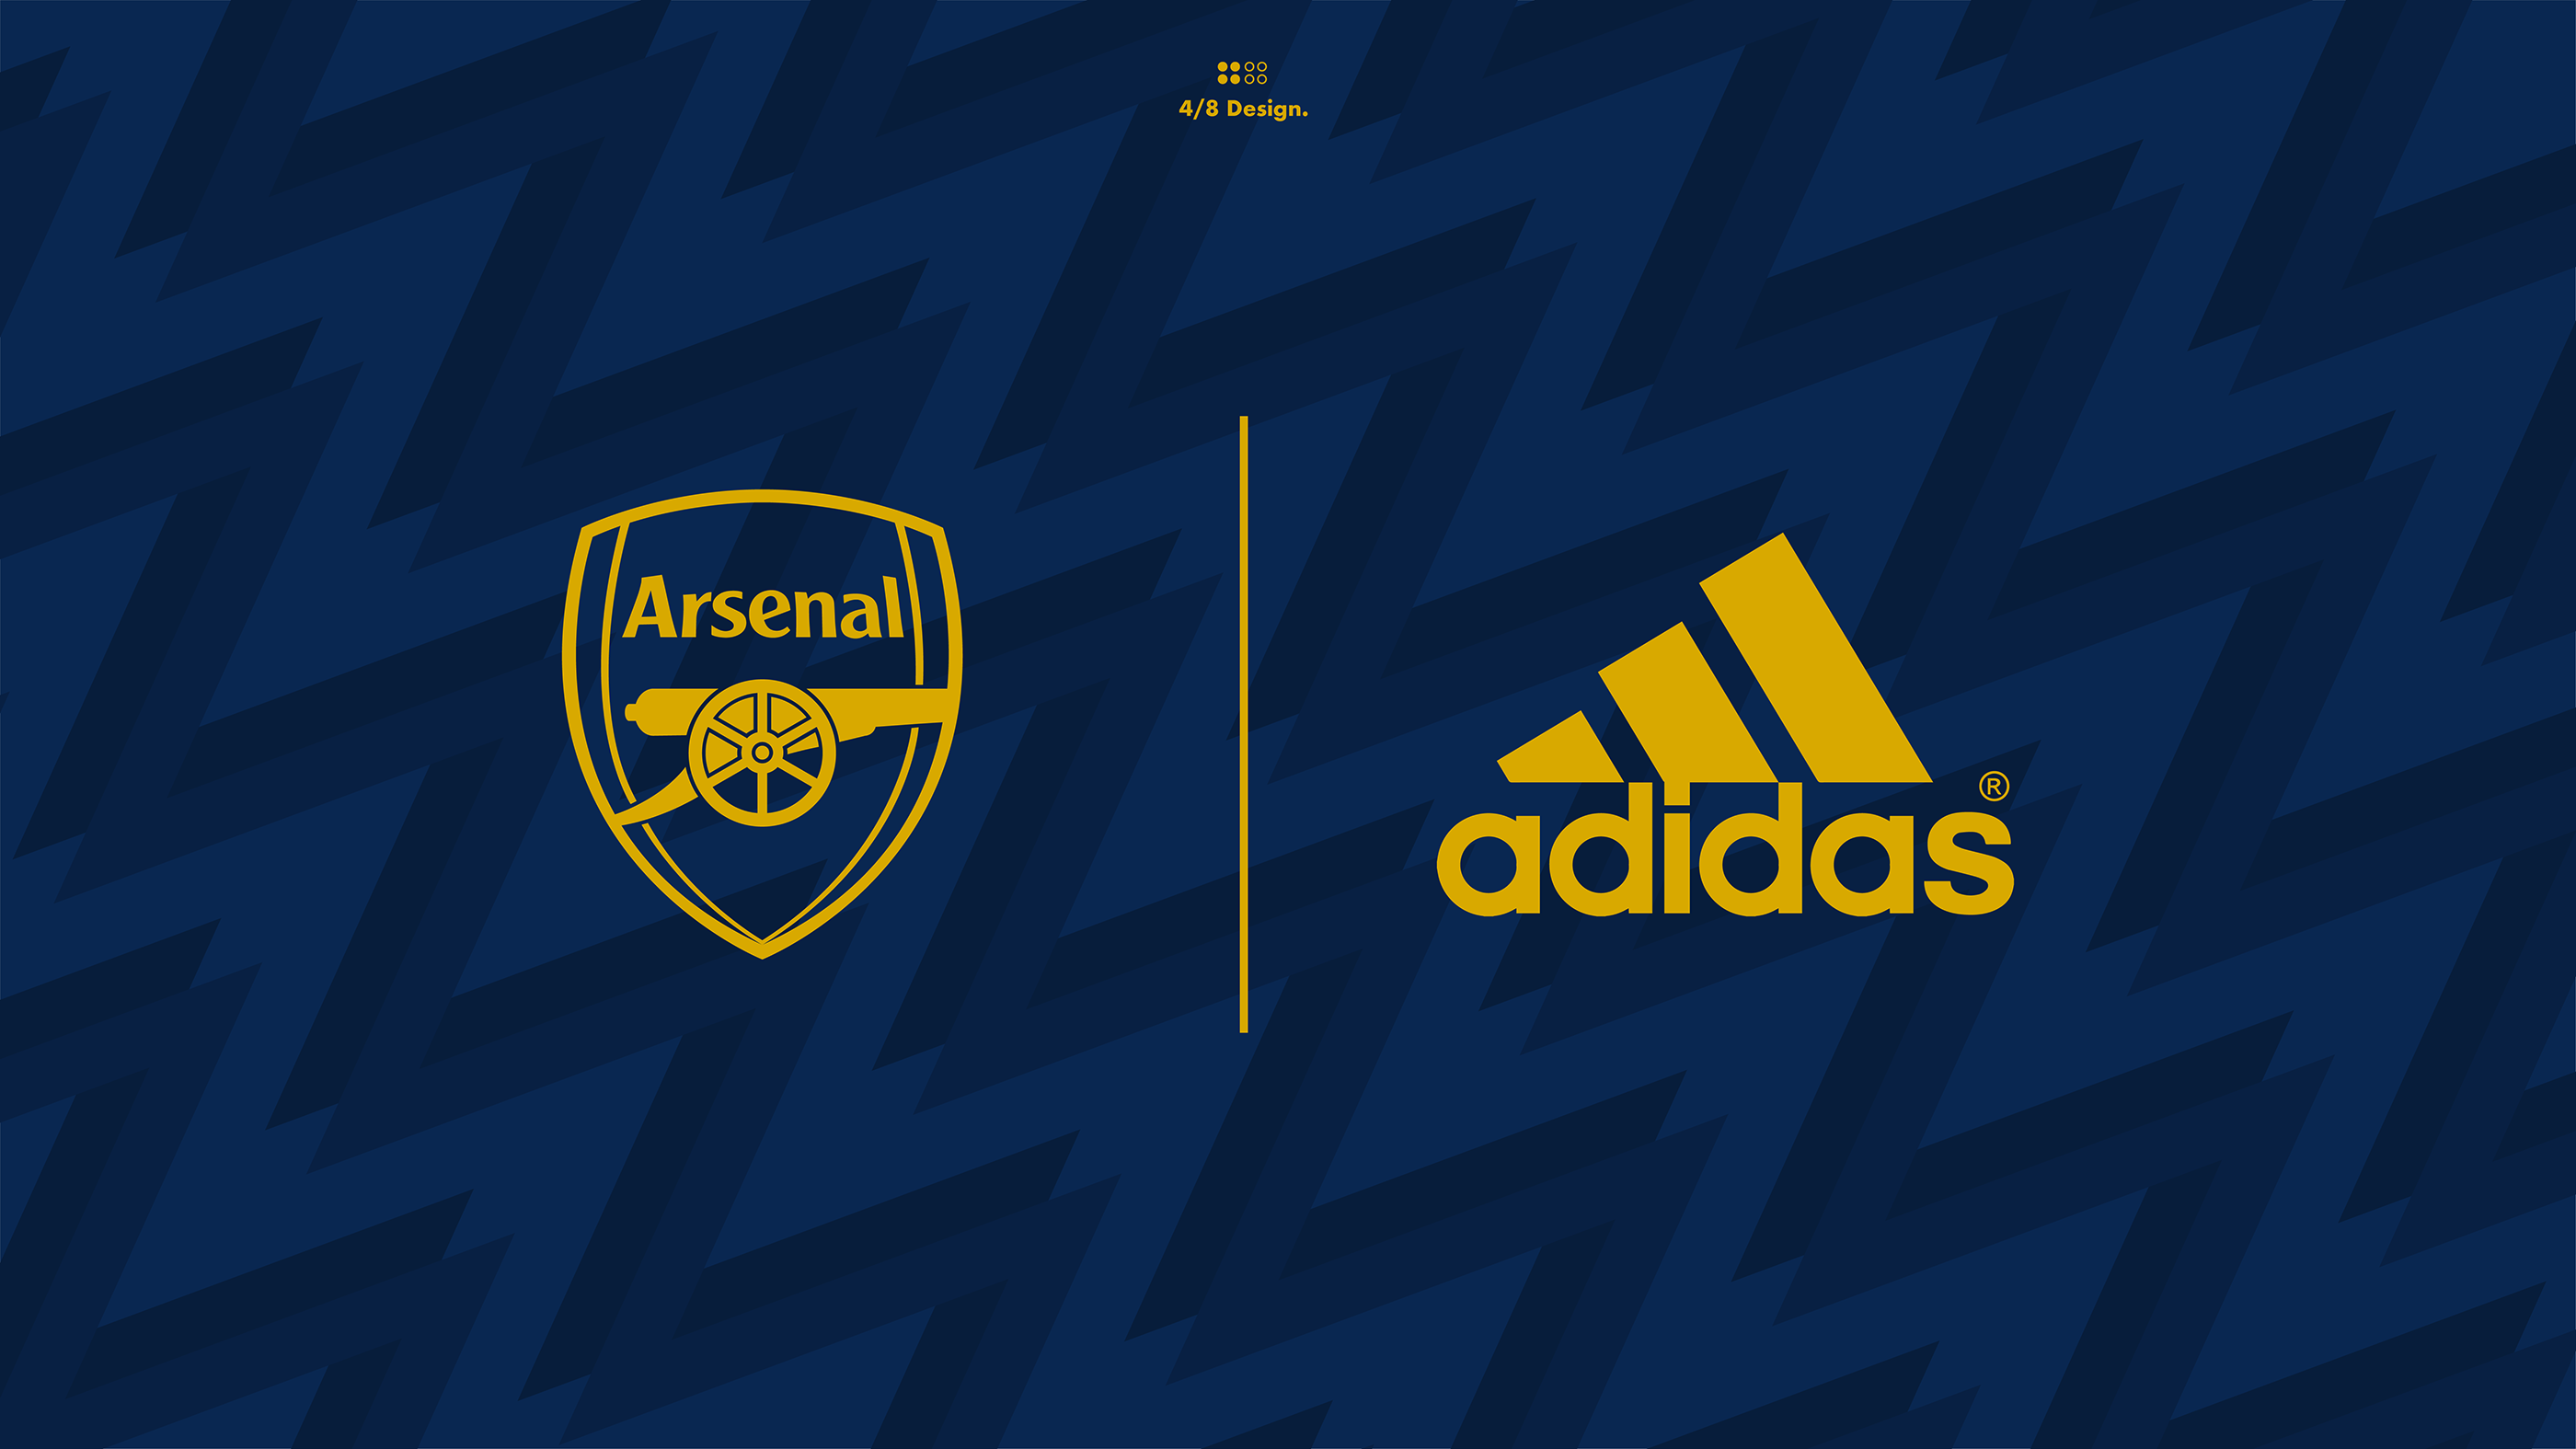 Arsenal Wallpaper Hd 2019 Adidas , HD Wallpaper & Backgrounds